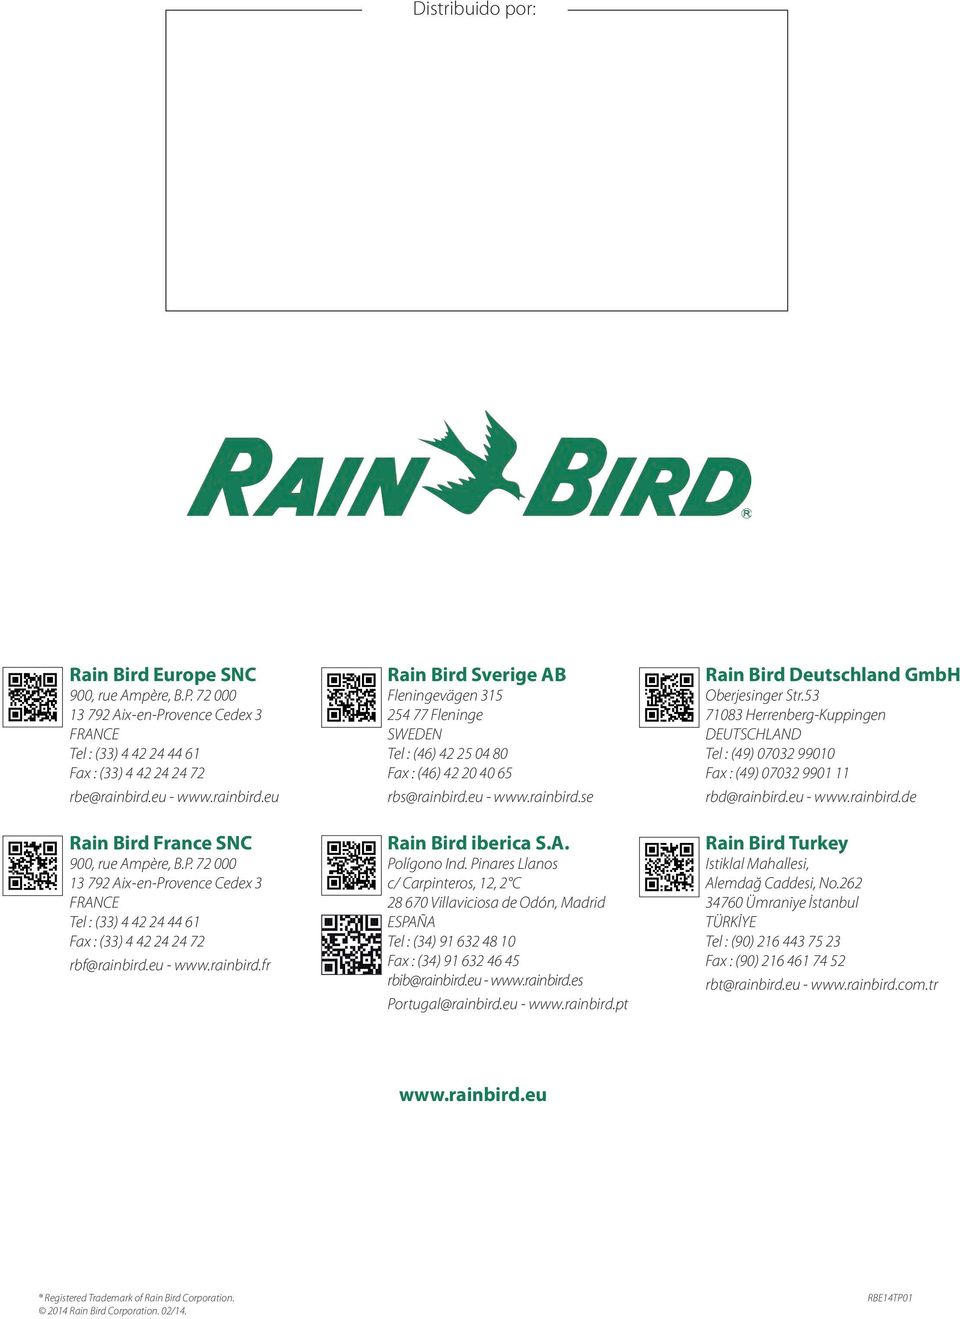 eu - www.rainbird.se Rain Bird iberica S.A. Polígono Ind.